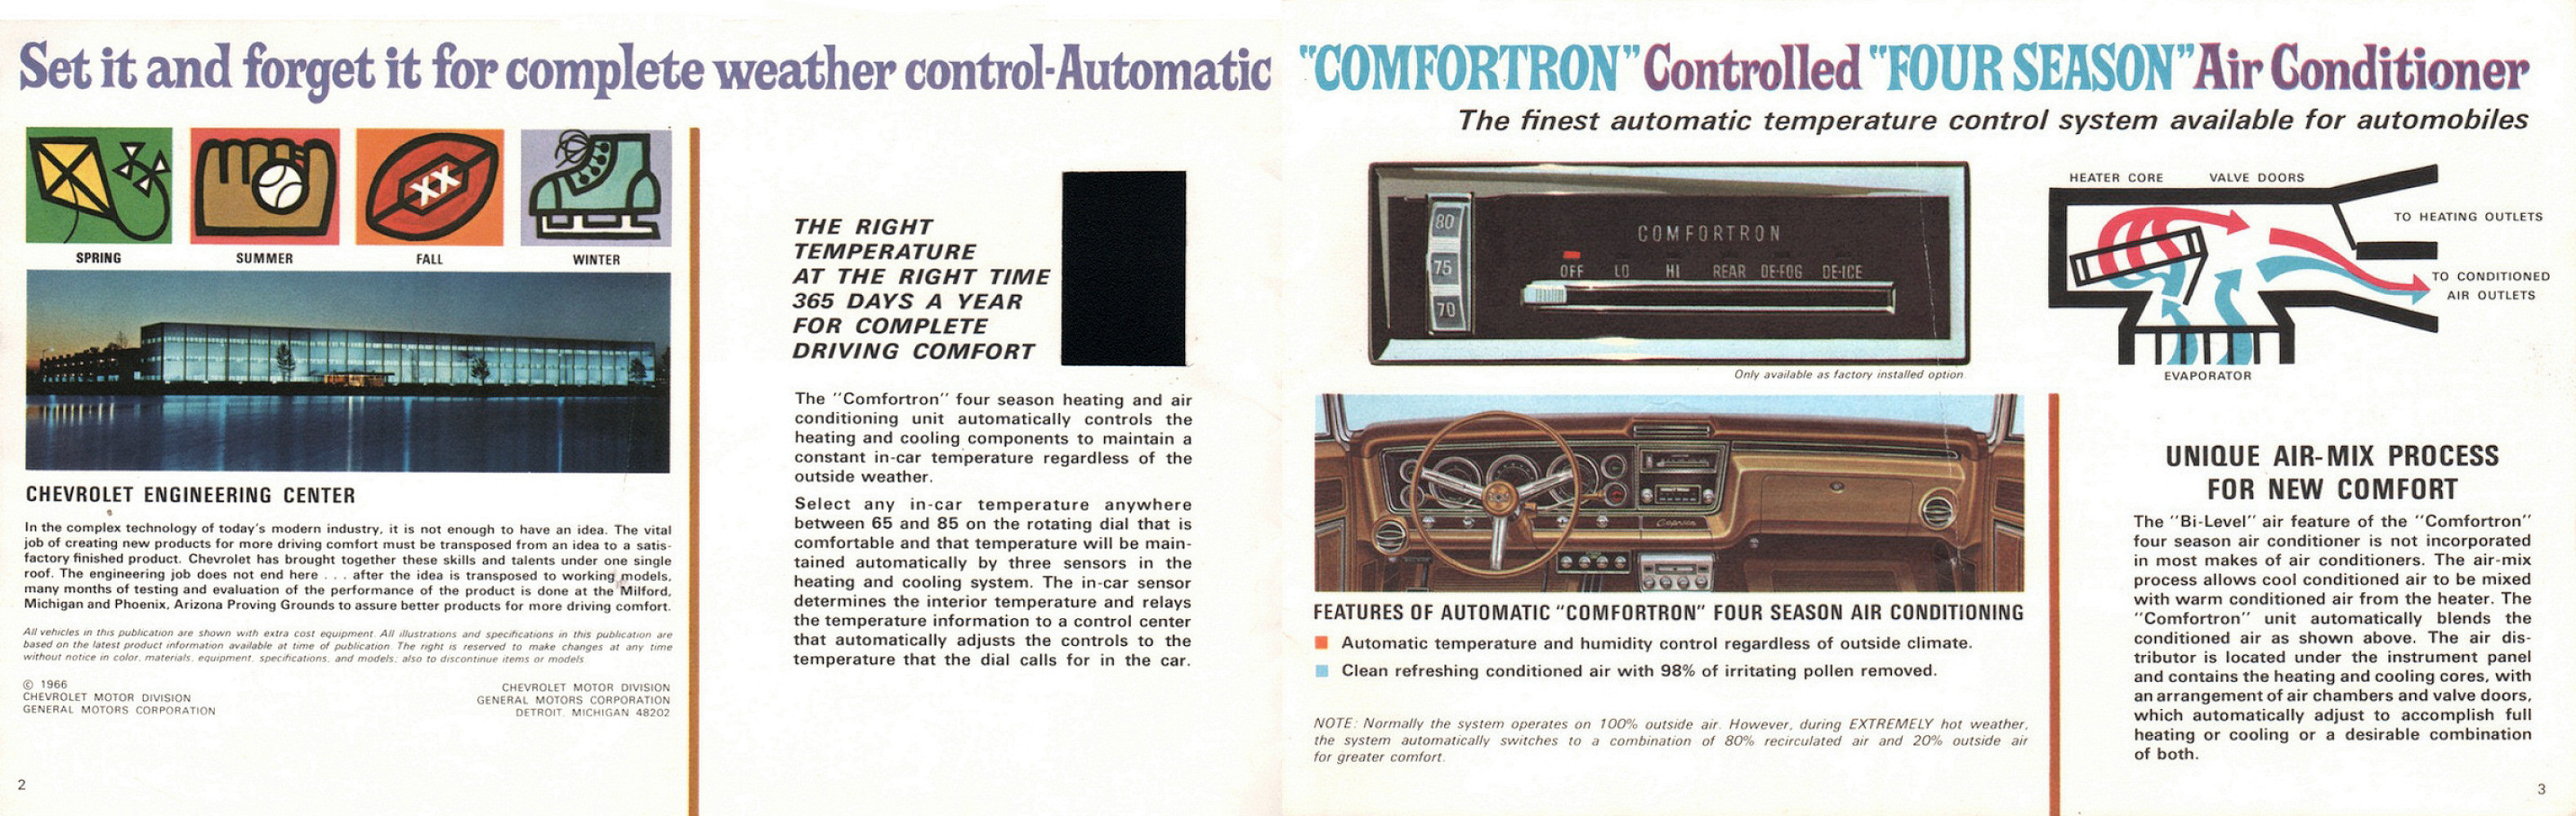 1966_Chevrolet_Weather_Control-02-03